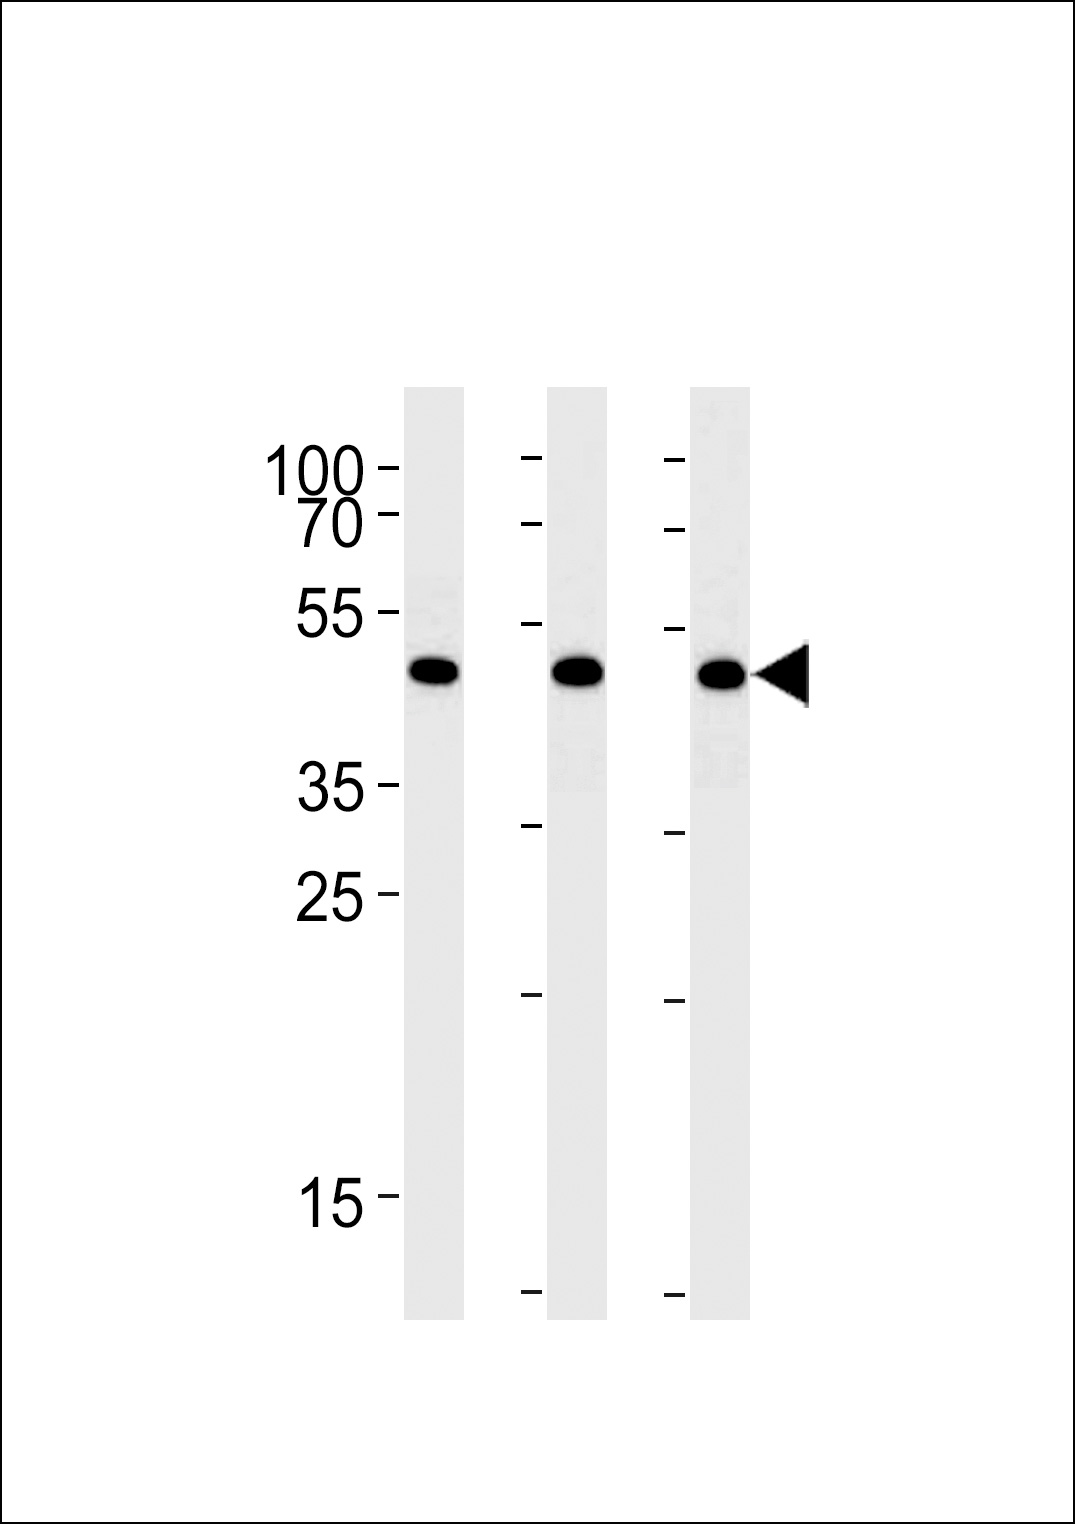 BAT1 Antibody (C-term) (Cat. #AP8740b) western blot analysis in A431,Hela,Jurkat cell line lysates (35ug/lane).This demonstrates the BAT1 antibody detected the BAT1 protein (arrow).